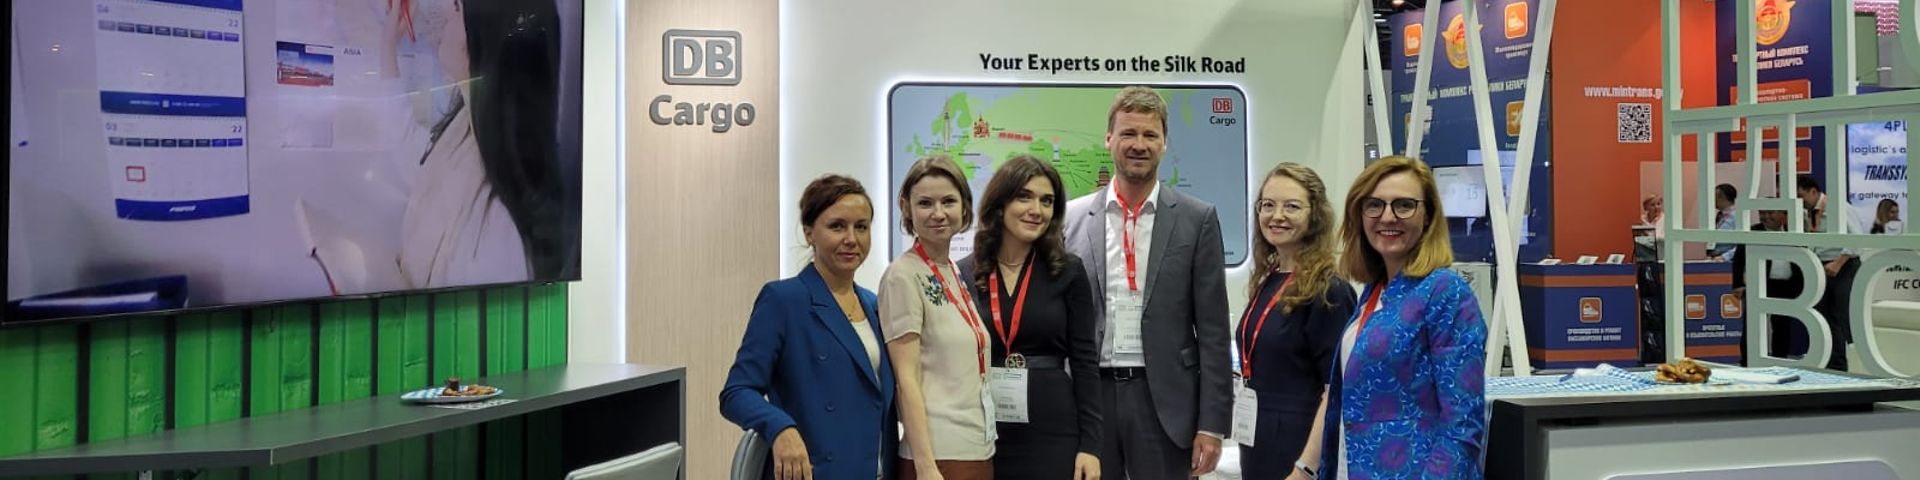 DB Cargo Team (ltr) Olga Snigur, Svetlana Rudakova, Diana Dmitrieva, Andreas Lübs, Yekaterina Ryabuschko & Tabea Klang